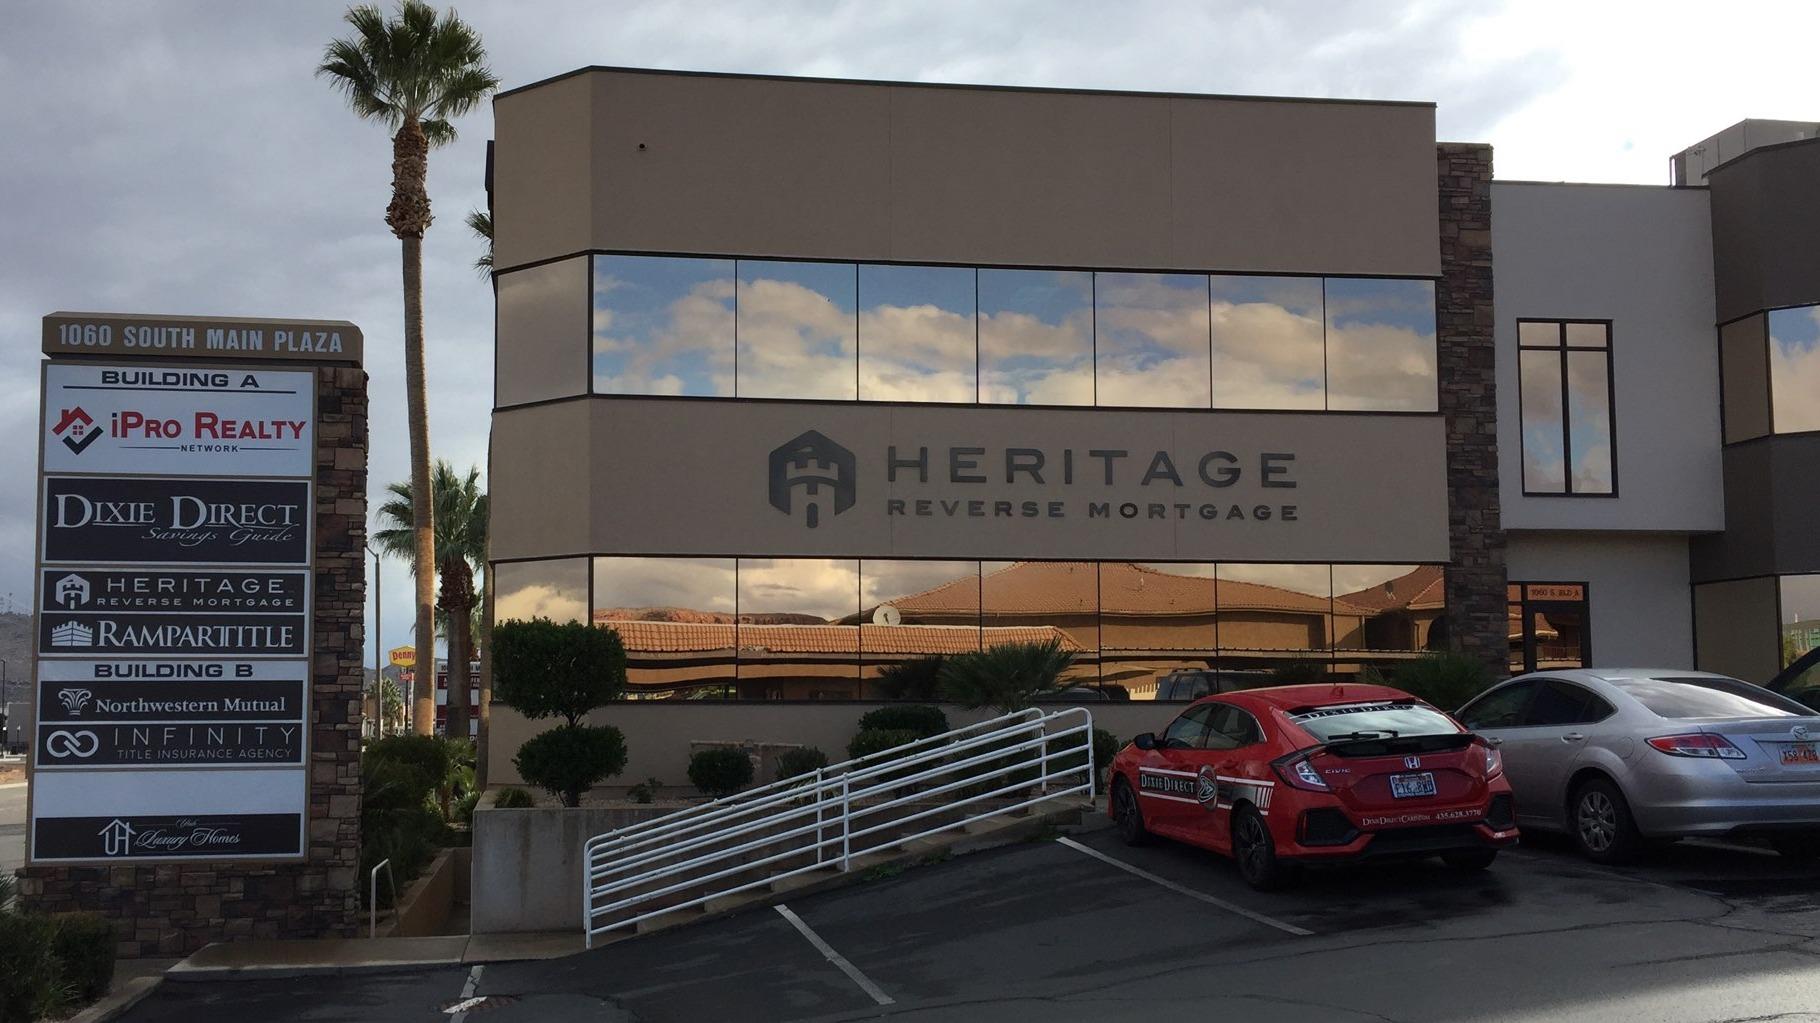 Heritage Reverse Mortgage